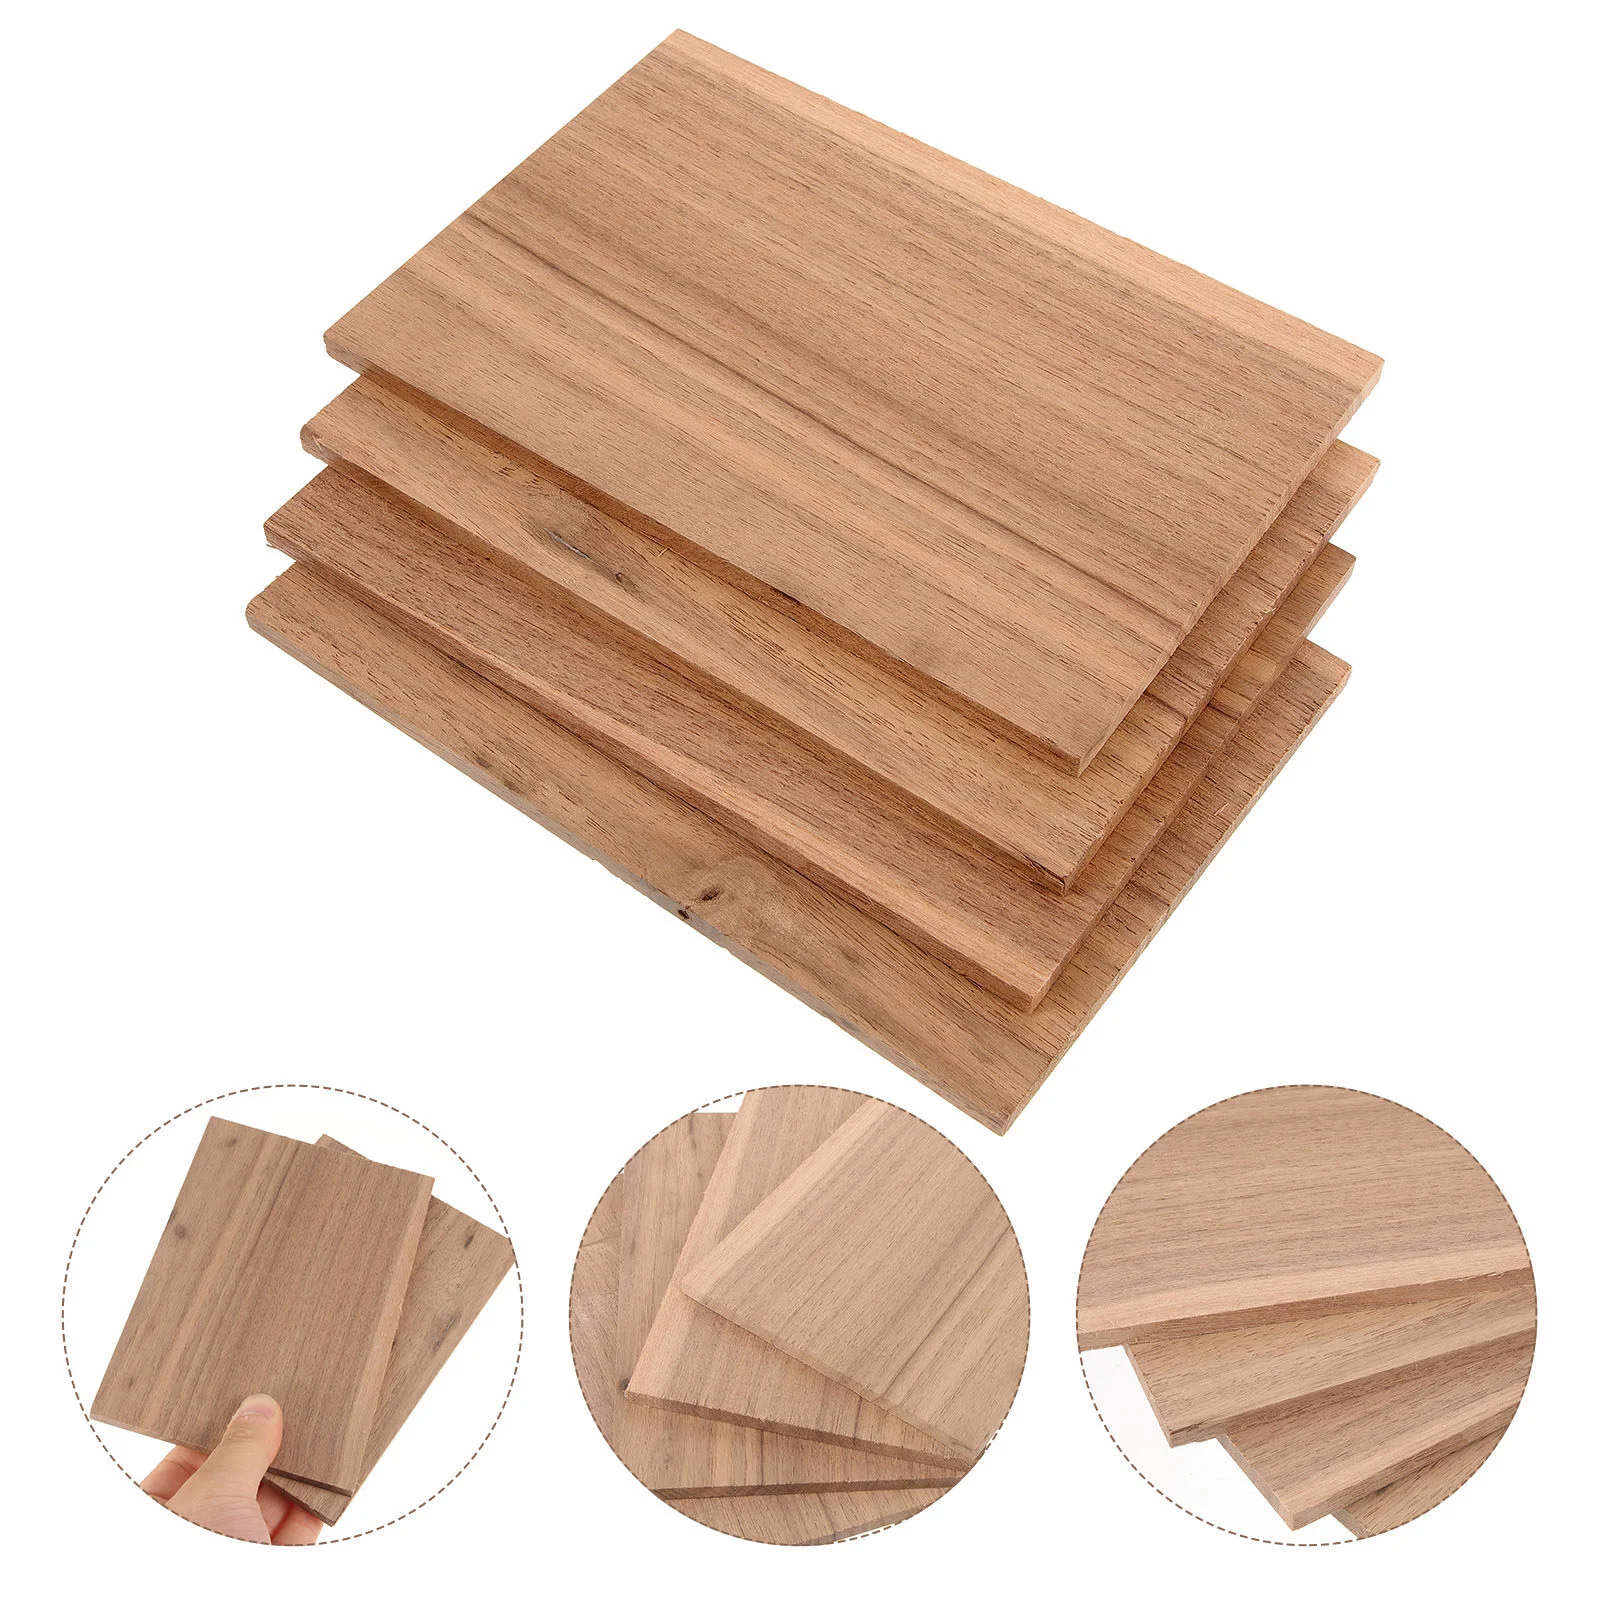 

4 Pcs Supplies Bench Wood Slats Wooden Boards Squares Crafts Planks Walnut DIY Plain Slice Furniture